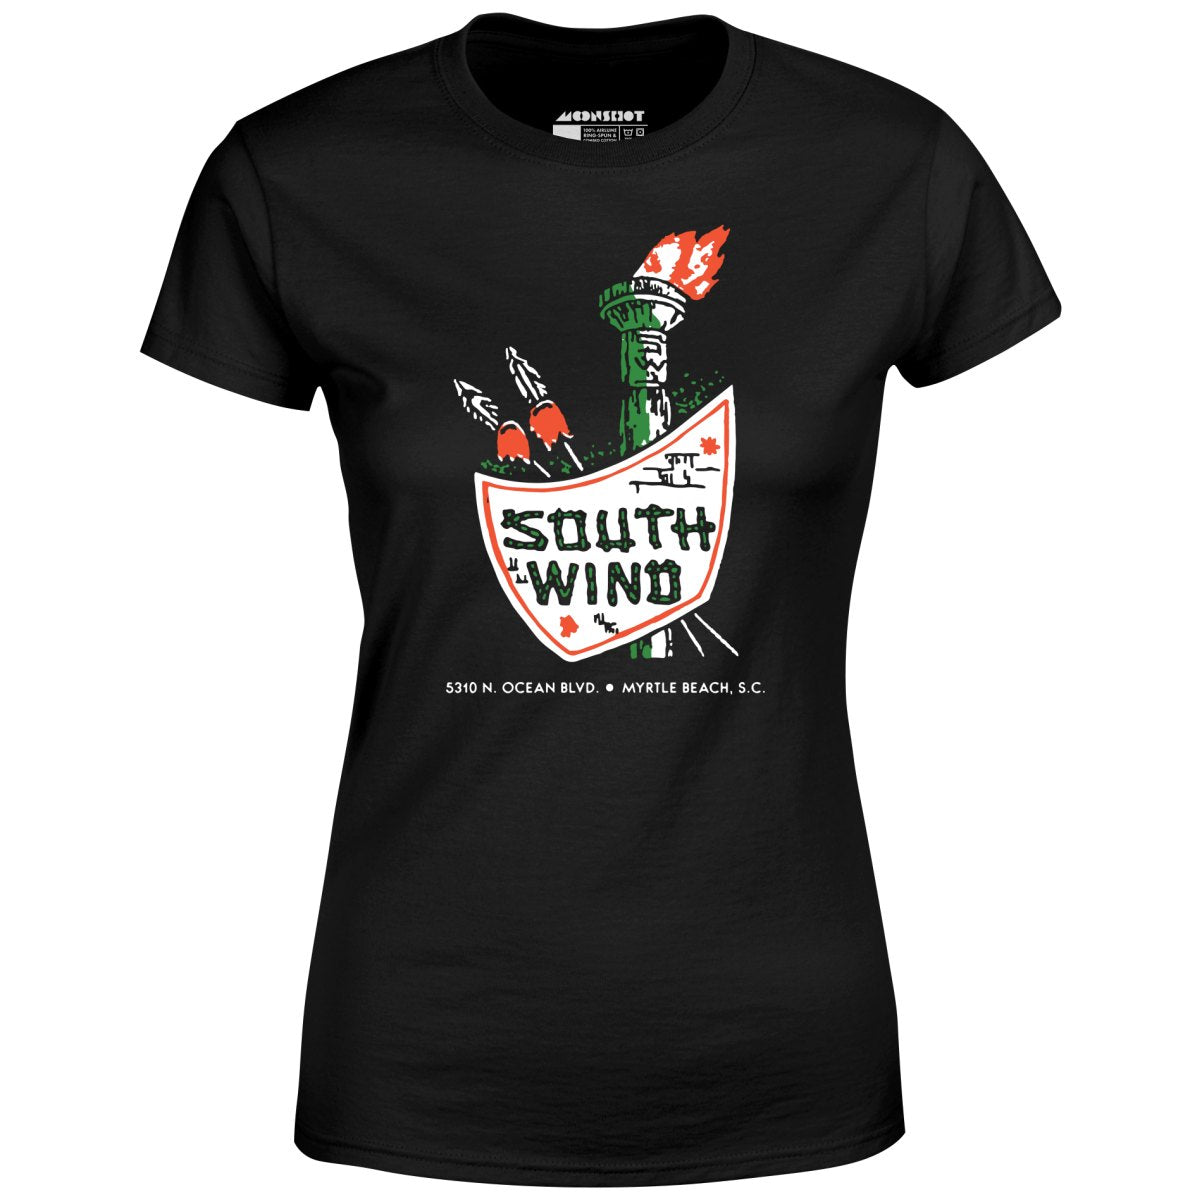 South Wind - Myrtle Beach, SC - Vintage Tiki Bar - Women's T-Shirt